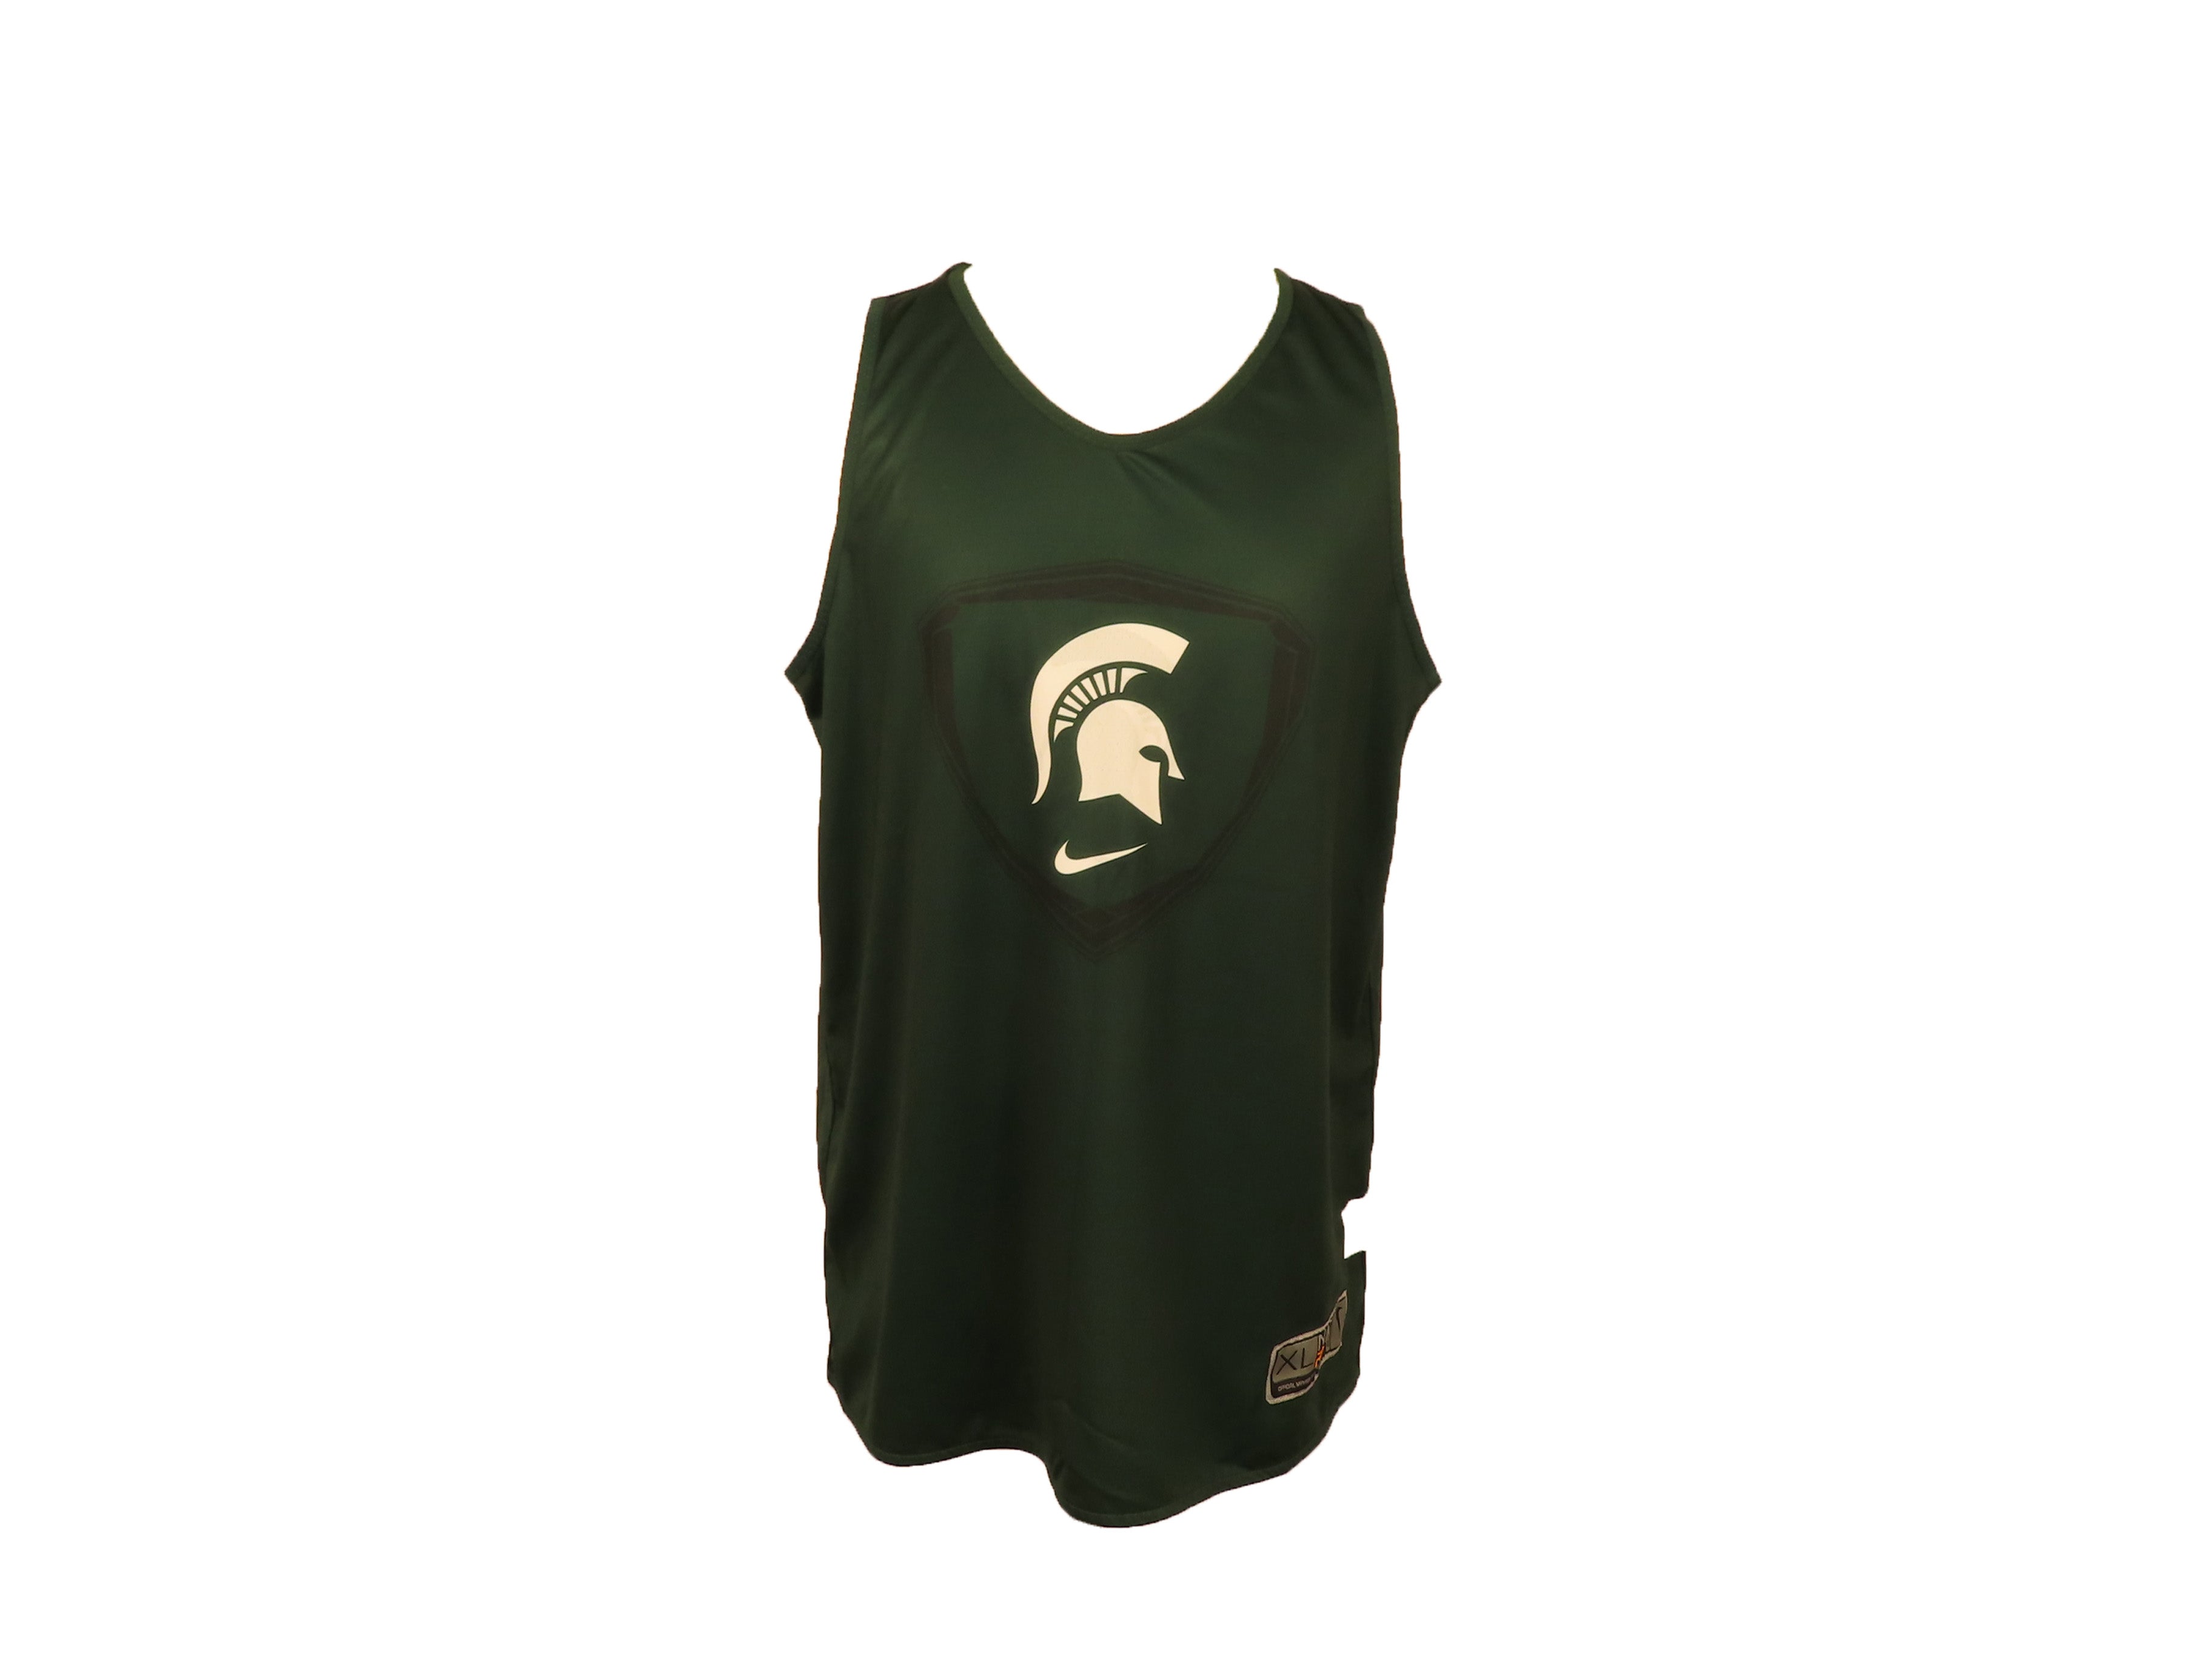 New Michigan State Spartans Men's Basketball Jersey Nike #21 WHITE GREEN XL